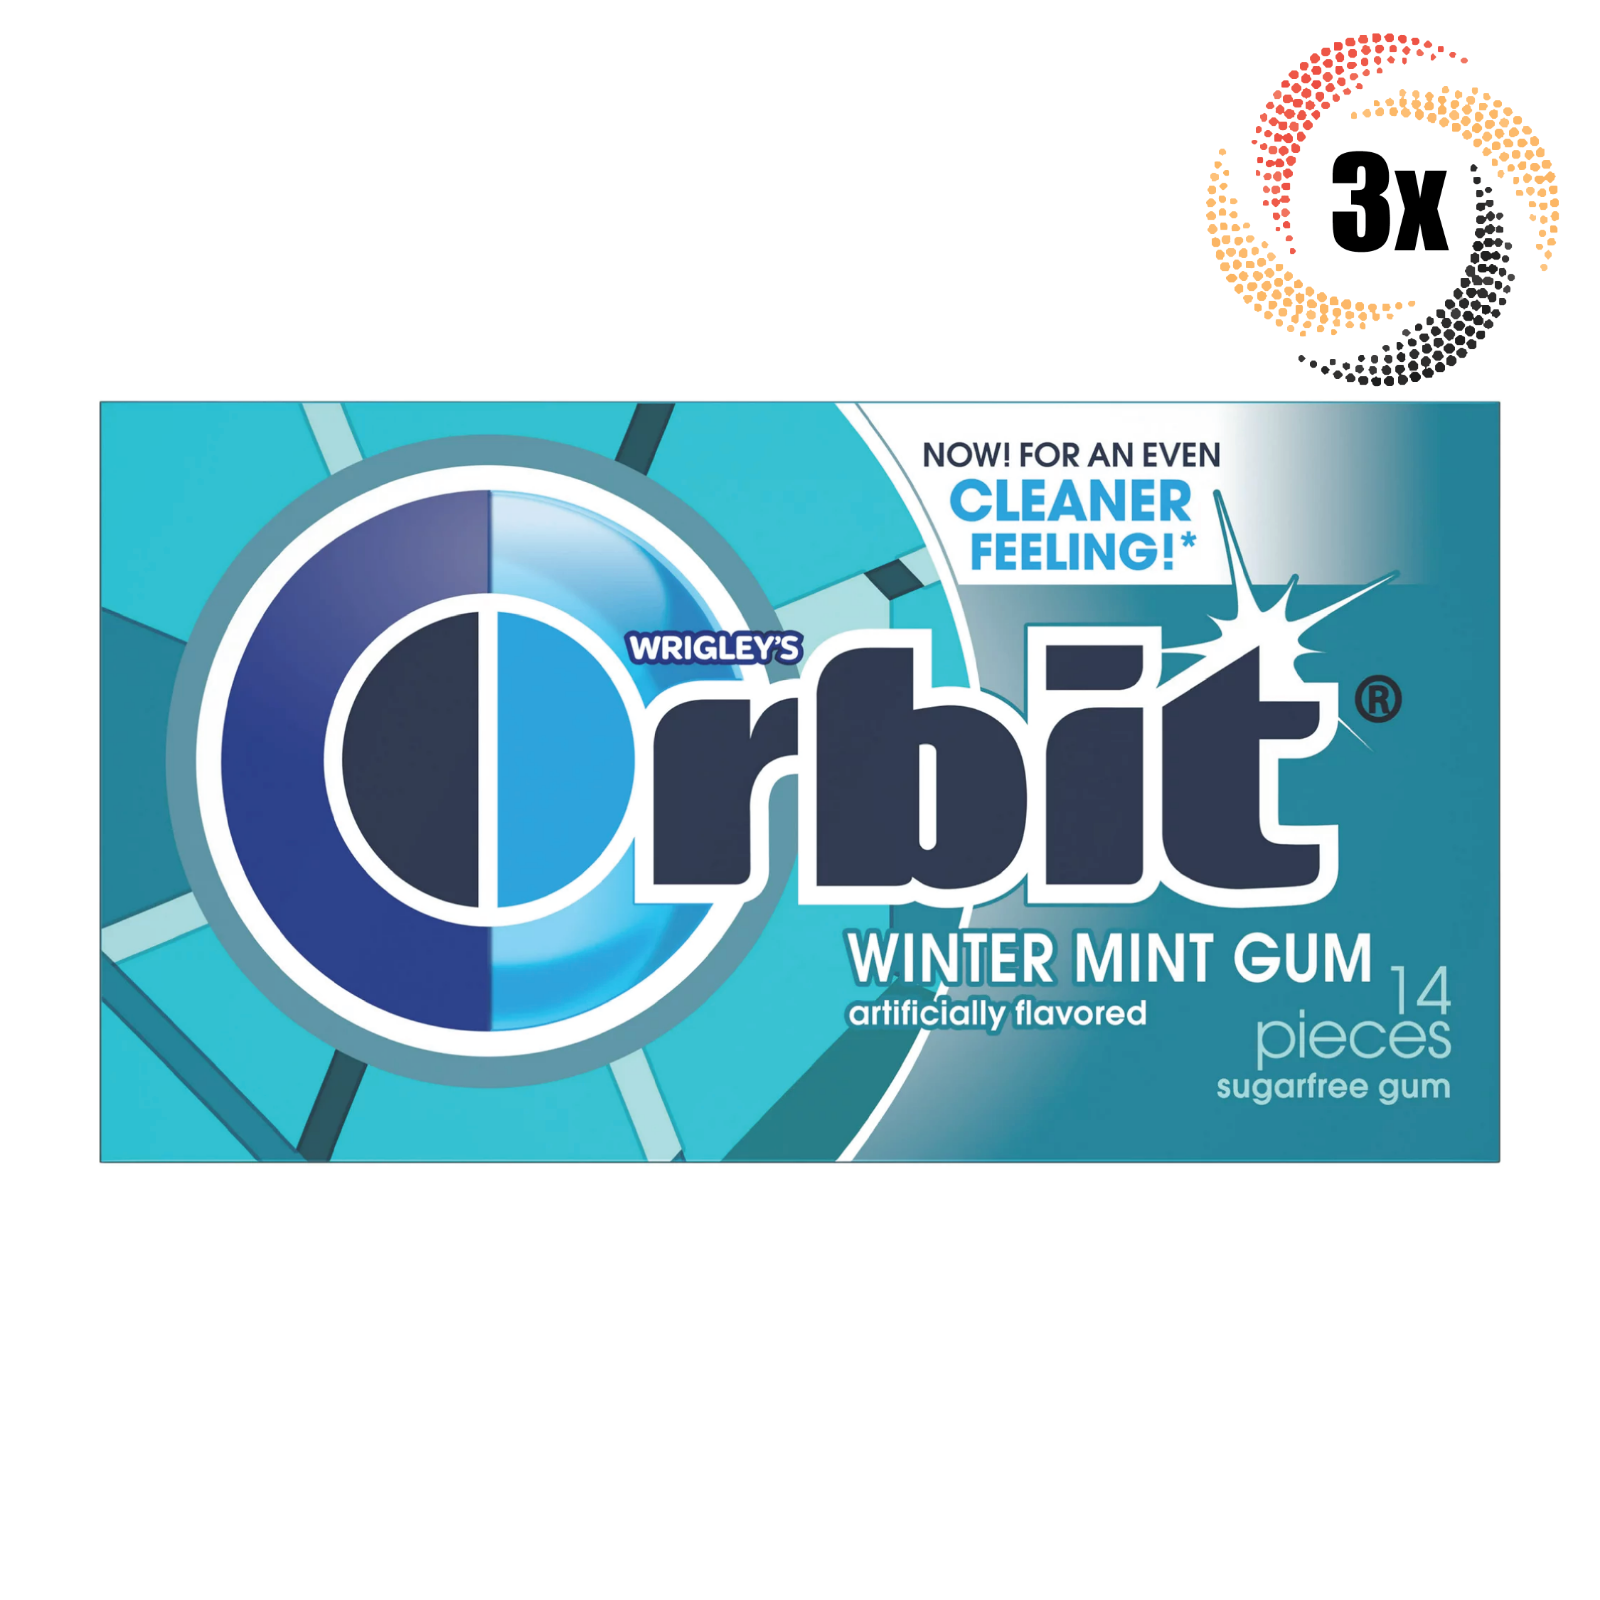 3x Packs Orbit Winter Mint Sugarfree Gum | 14 Pieces Per Pack | Fast Shipping - $11.31